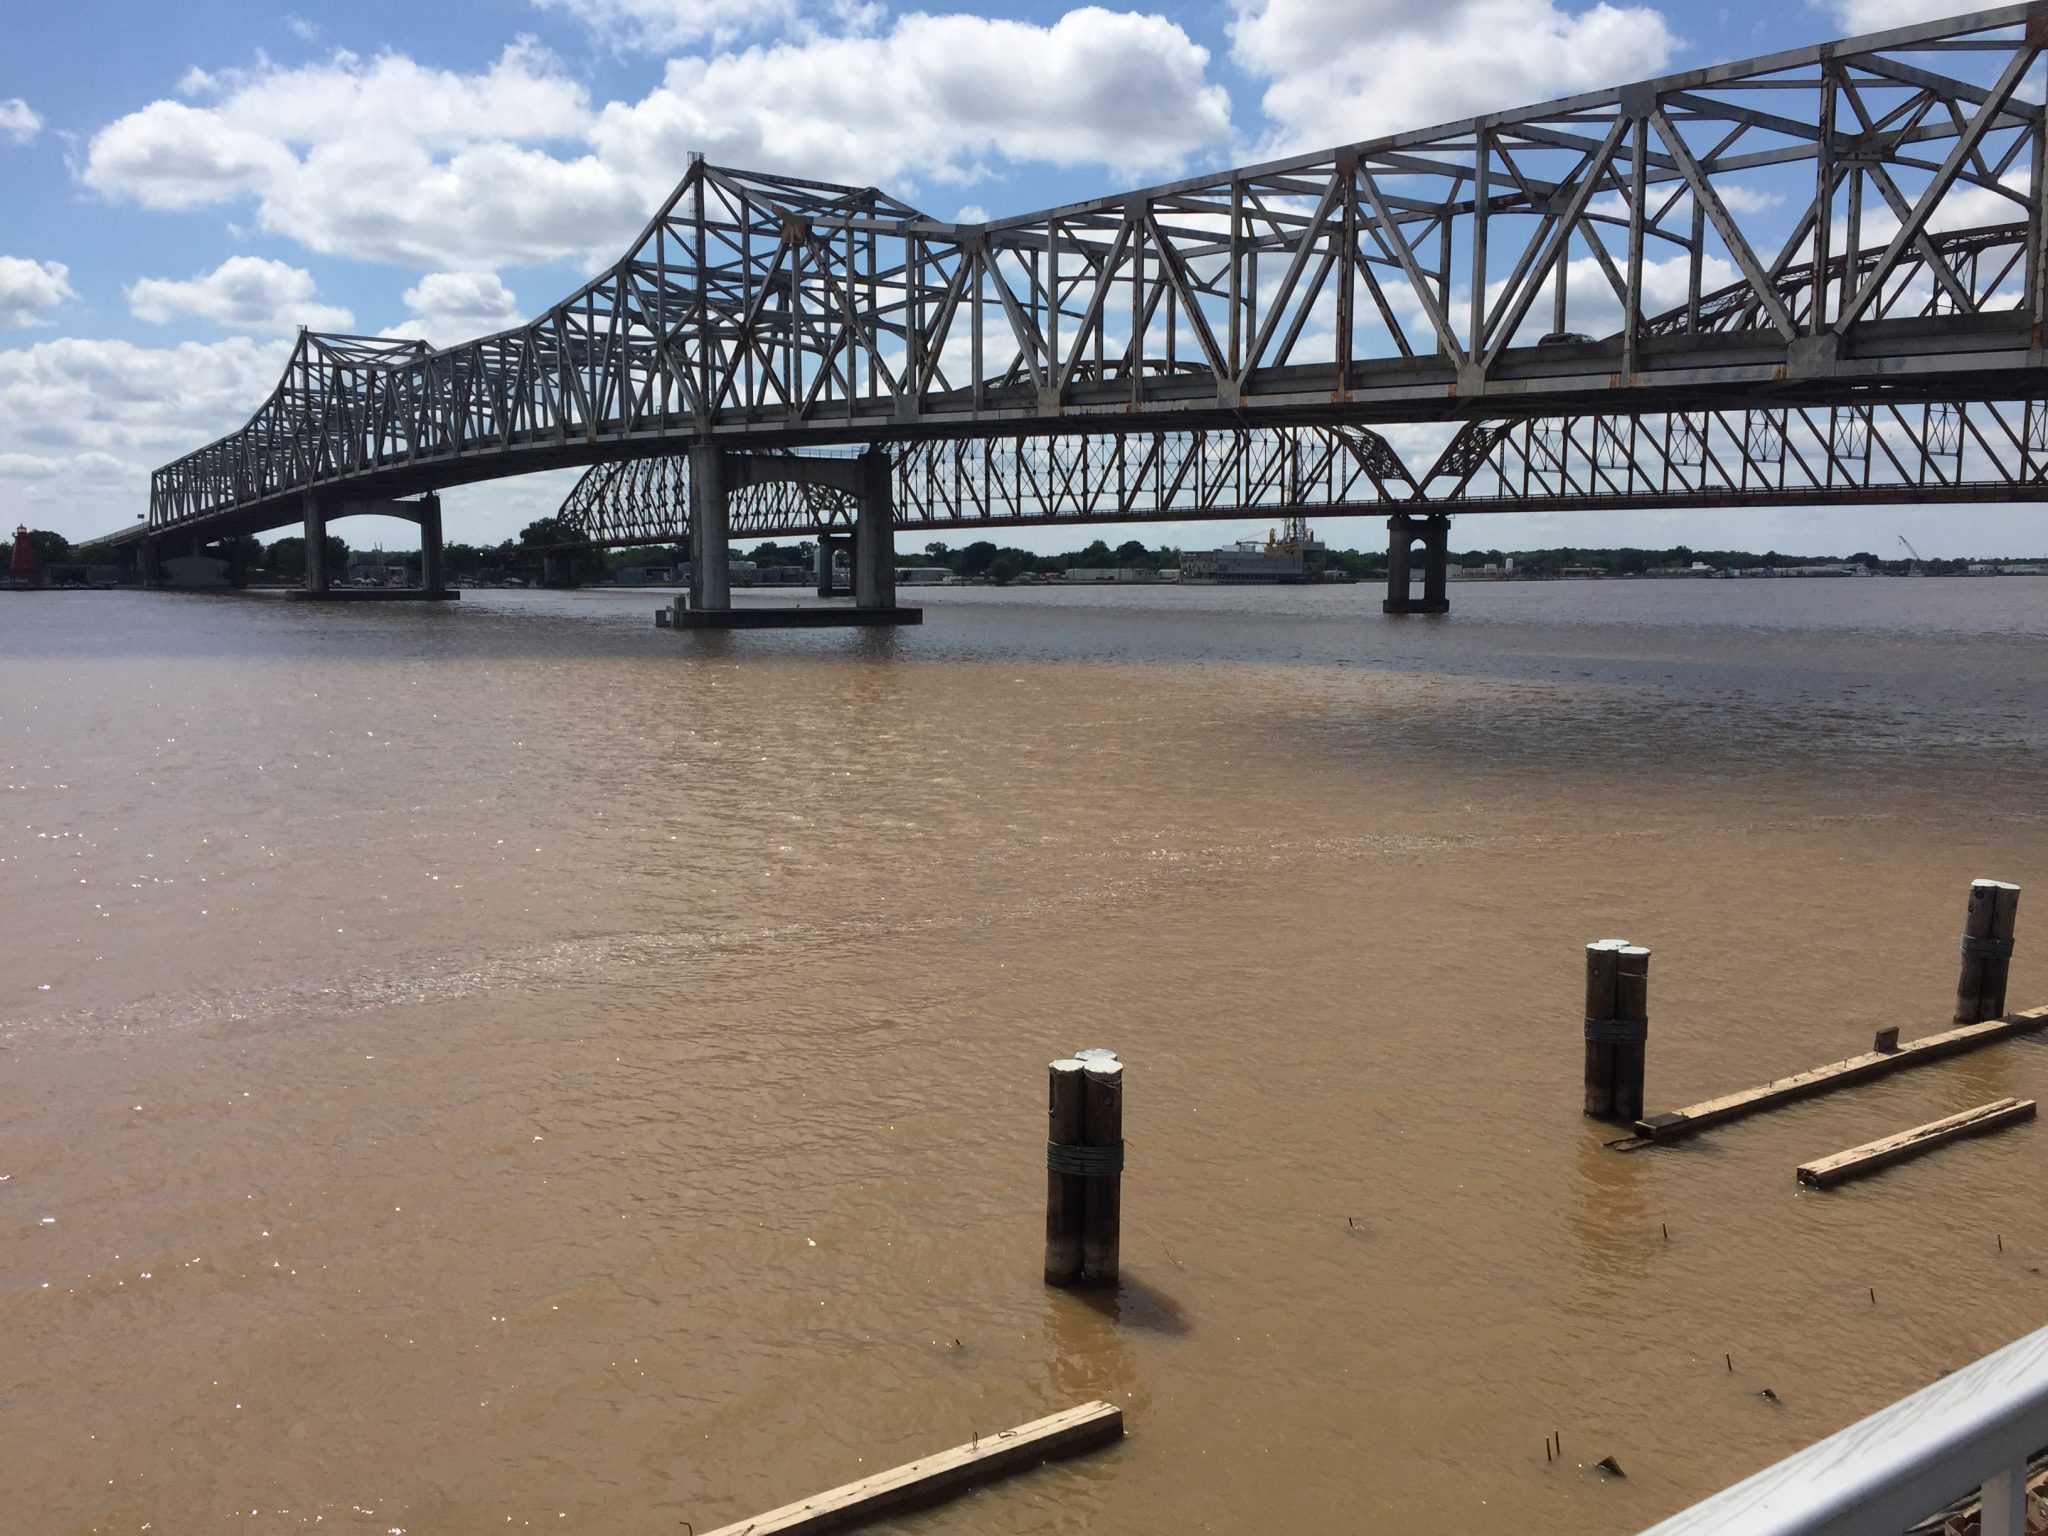 The E. J. "Lionel" Grizzaffi Bridge (a cantilever bridge) over the Atchafalaya River at Morgan City, Louisiana